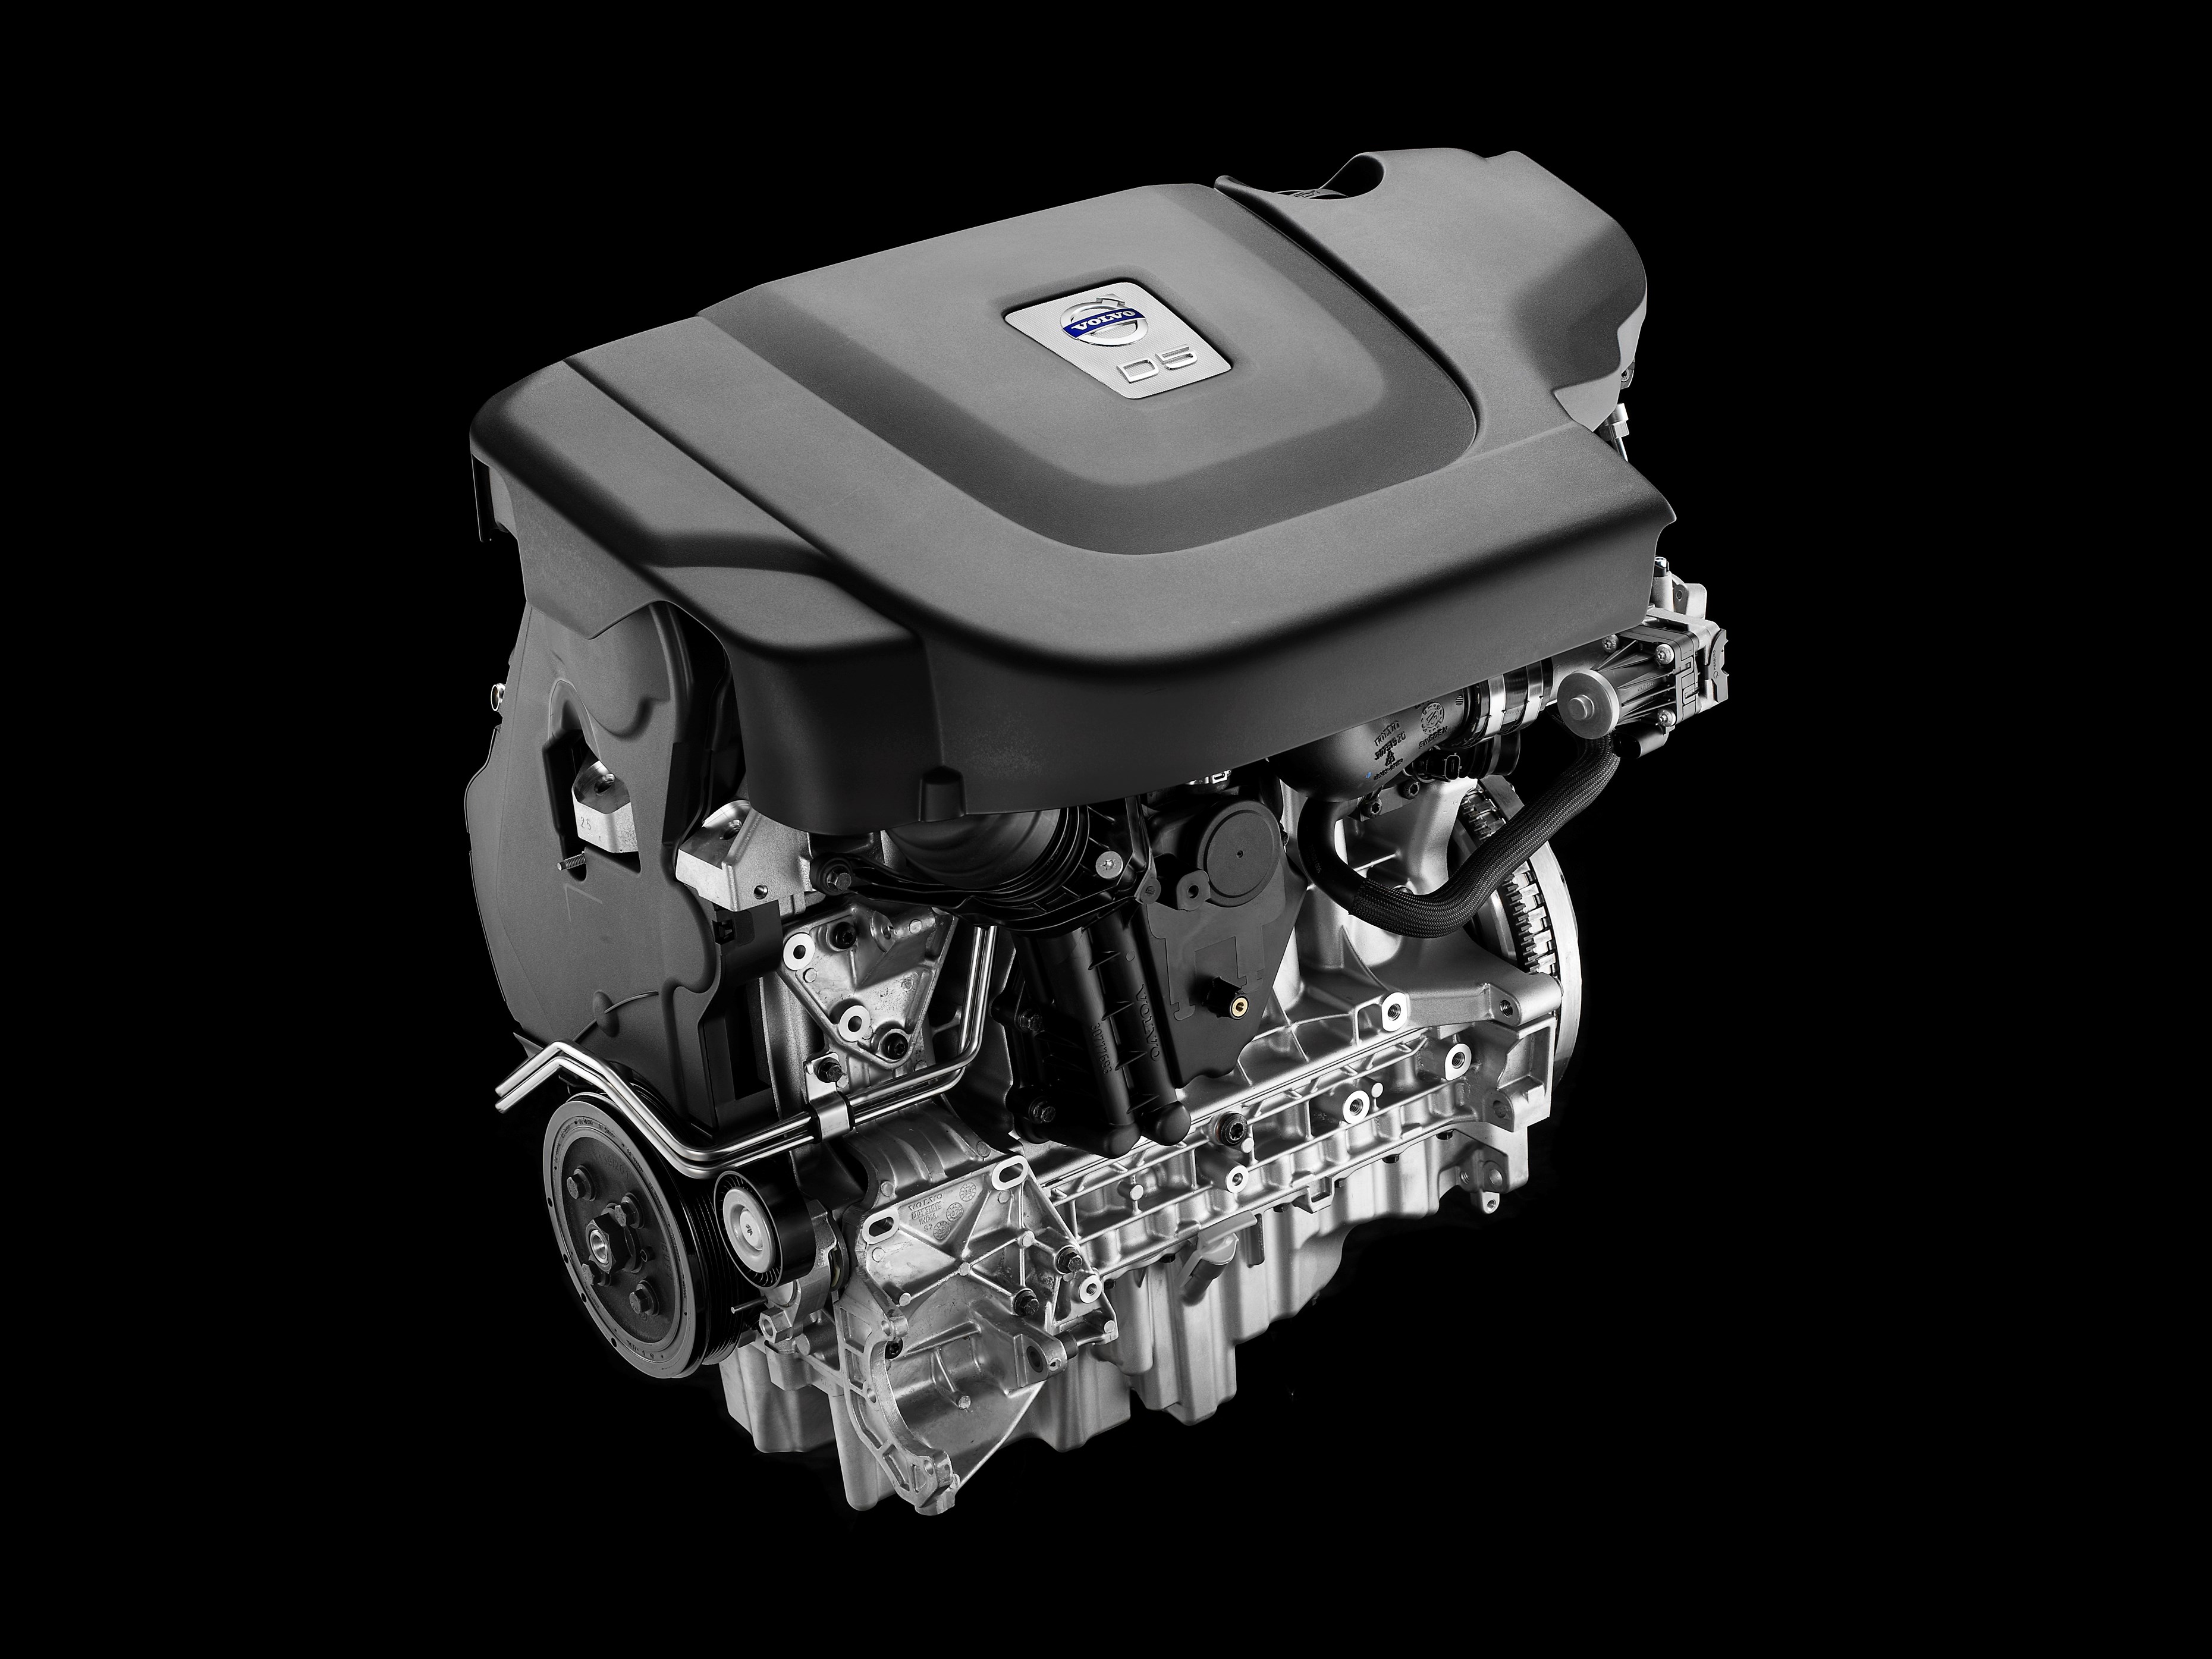 Двигатель пятерка. Volvo d5 двигатель. Двигатель Вольво хс60 2.4 дизель. D5244t двигатель Volvo. Вольво хс60 двигатель д5.